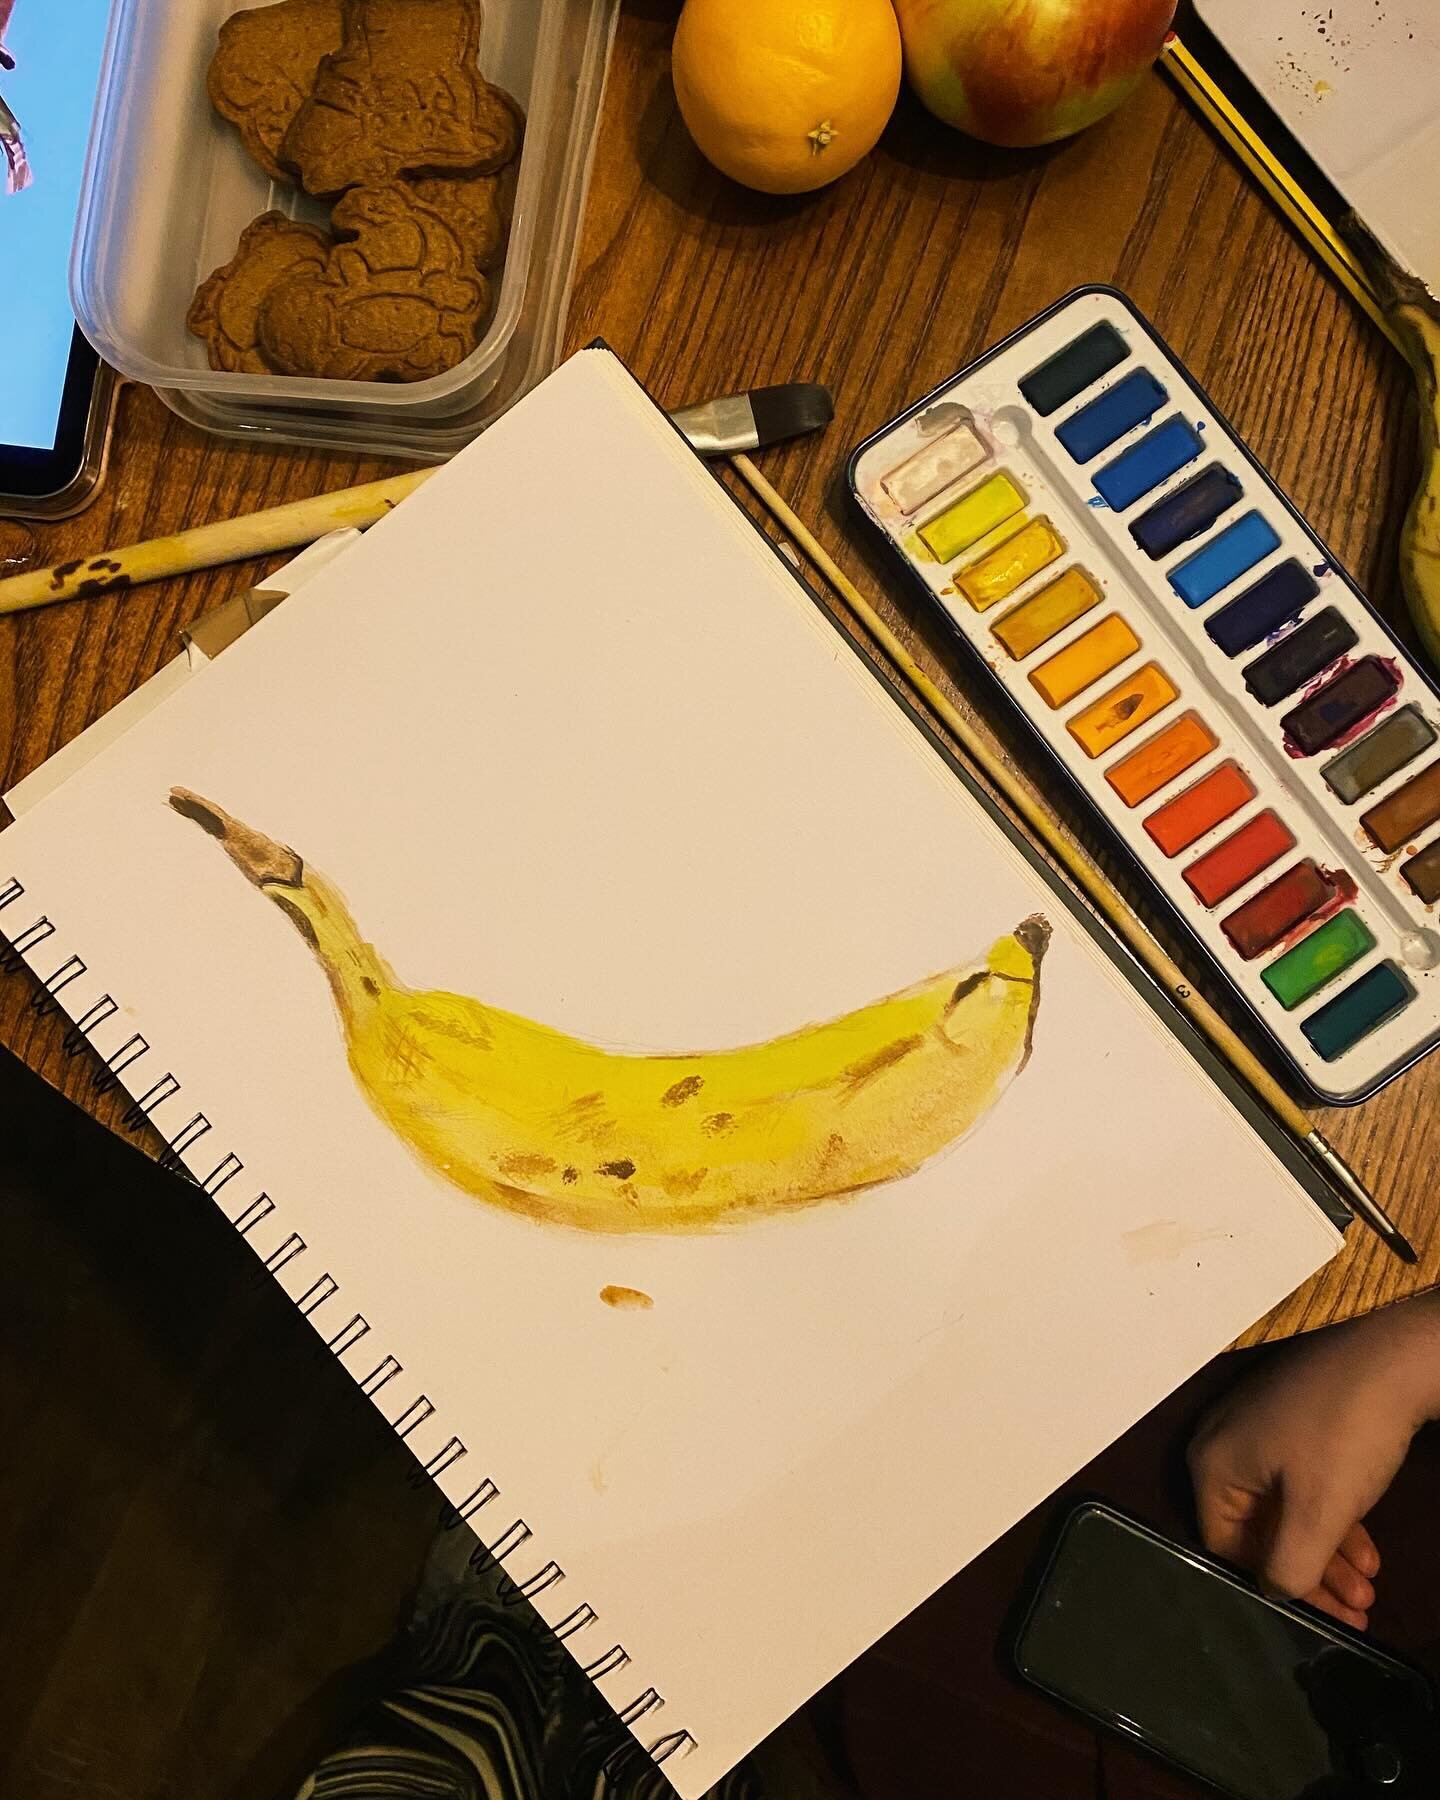 An ode to bananas and burgers 🍌🍔

Details on our next meet-up coming soon! 

#sketchandsocial #banana #burger #cambridge #creative #sketching #stilllife